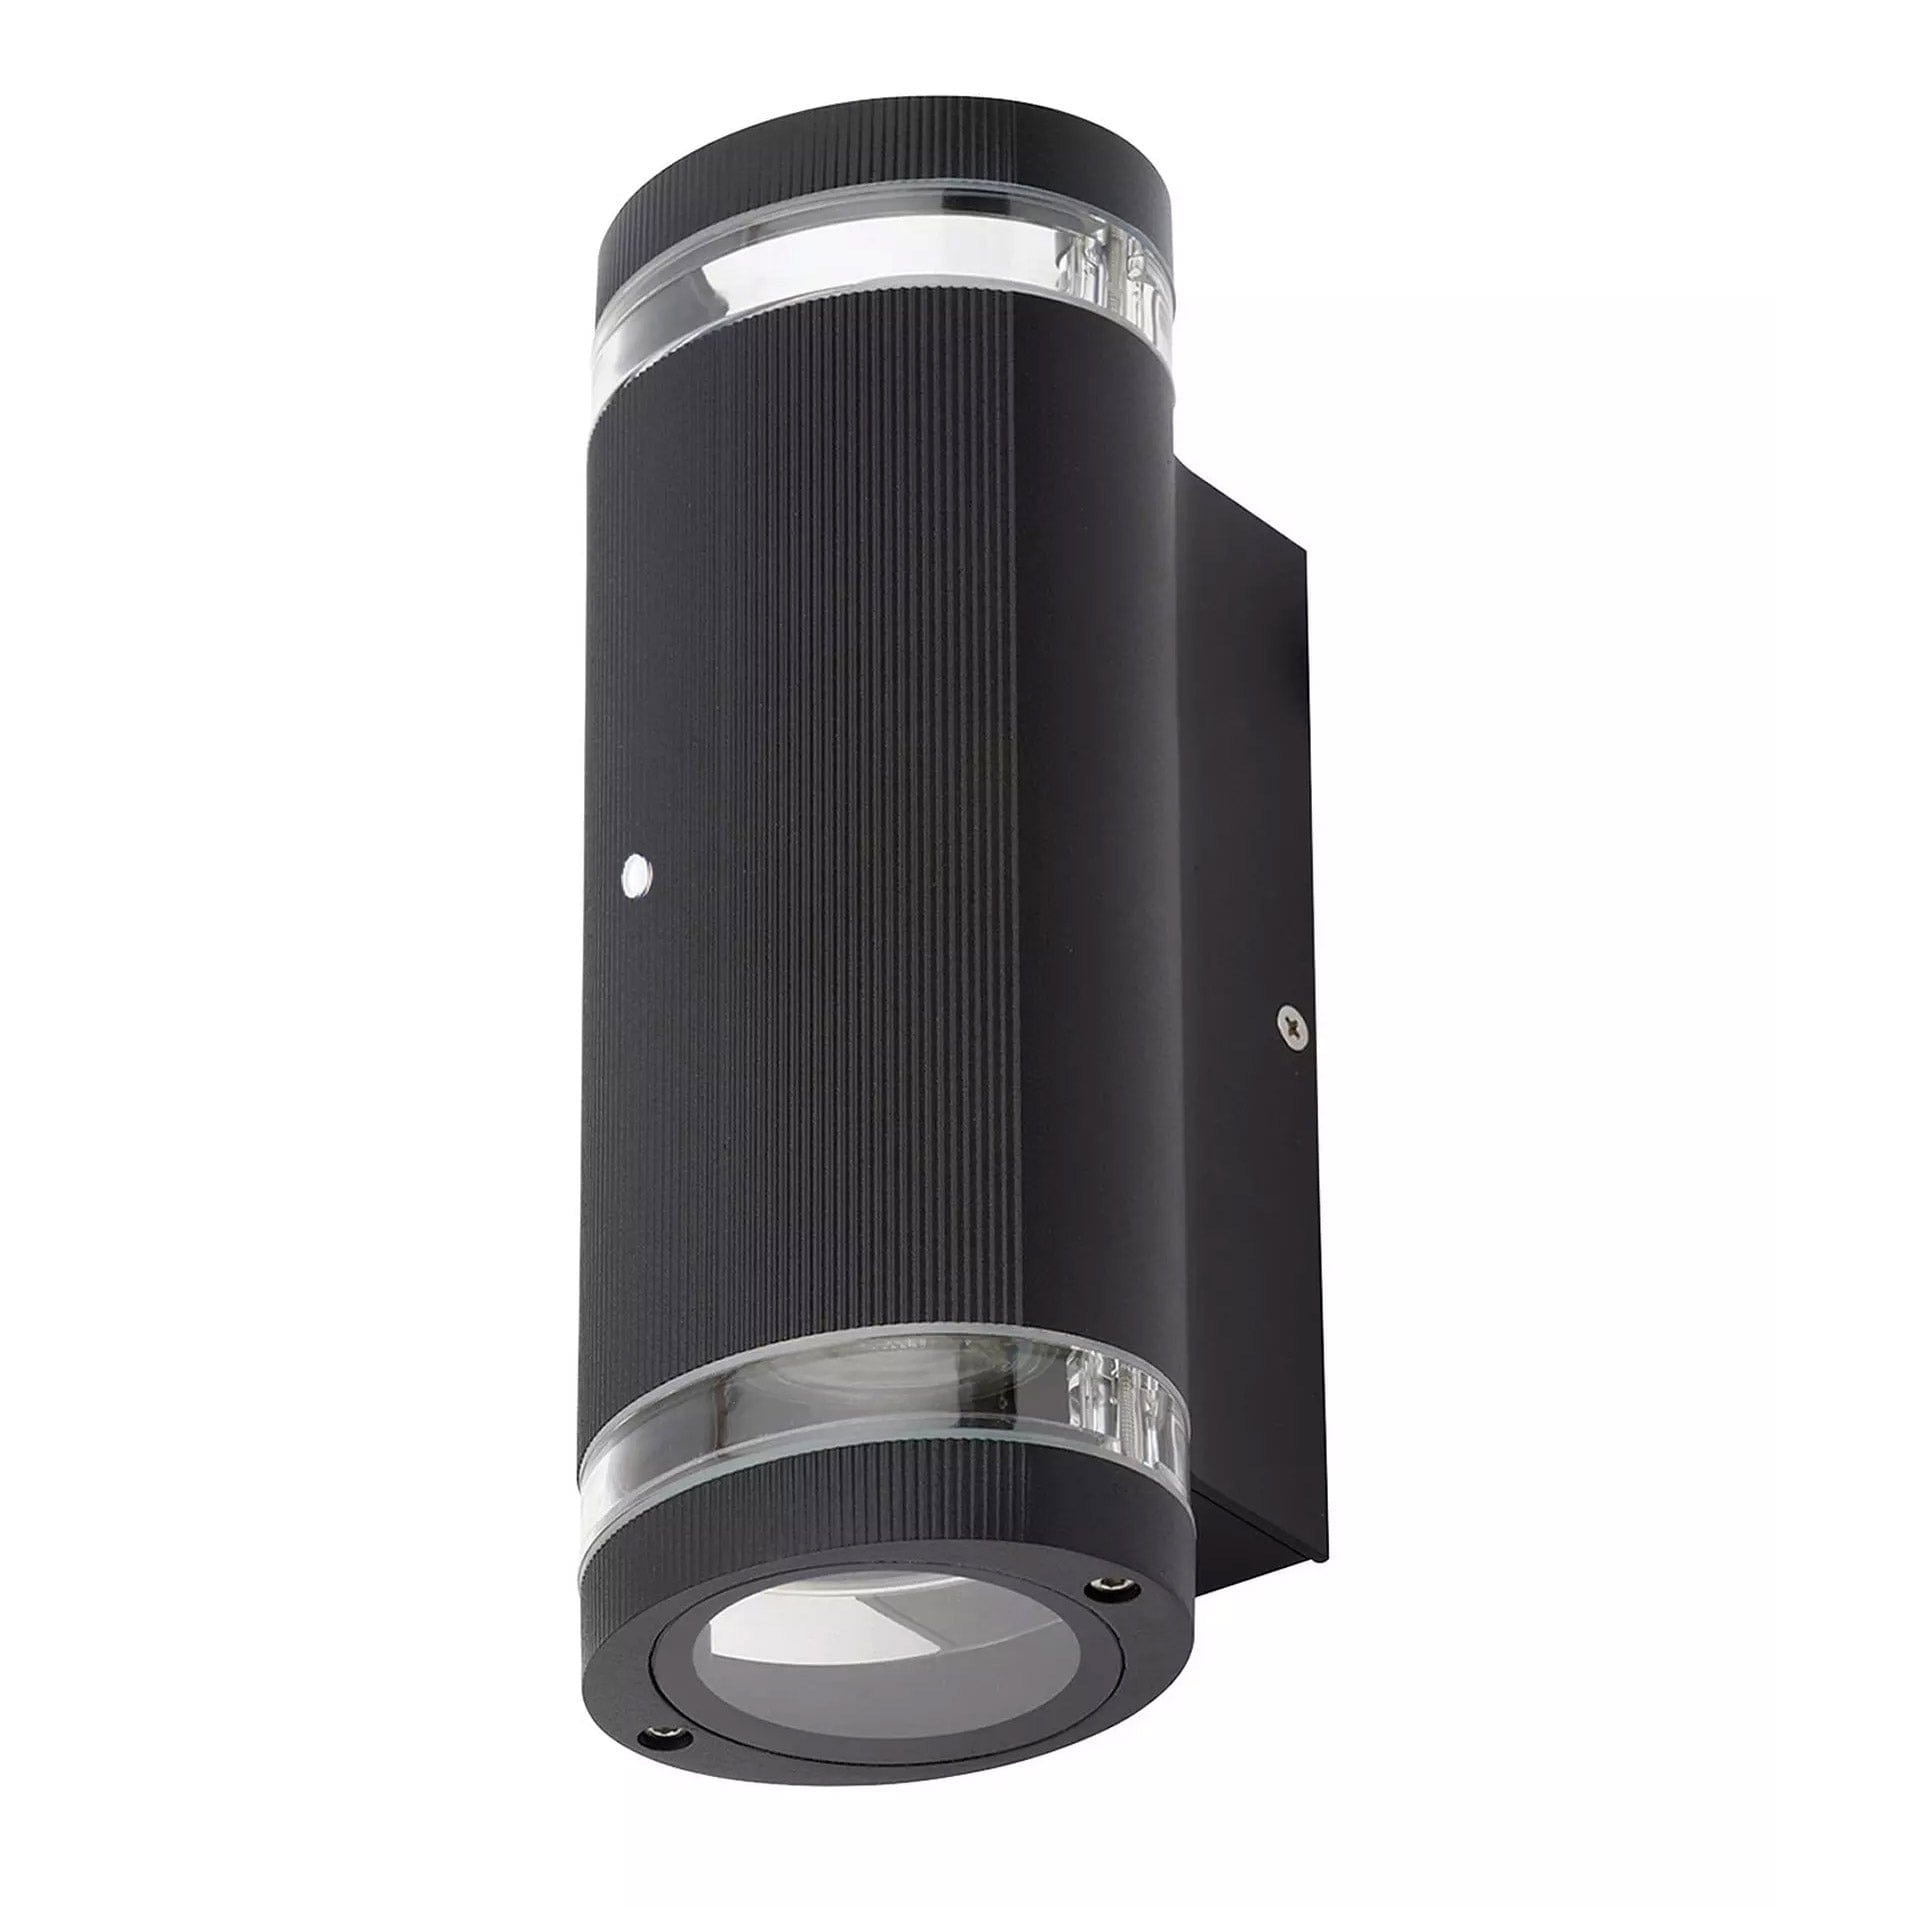 Lights  -  Helix Up/Down Black Outdoor Photocell Sensor Wall Light  -  60000018